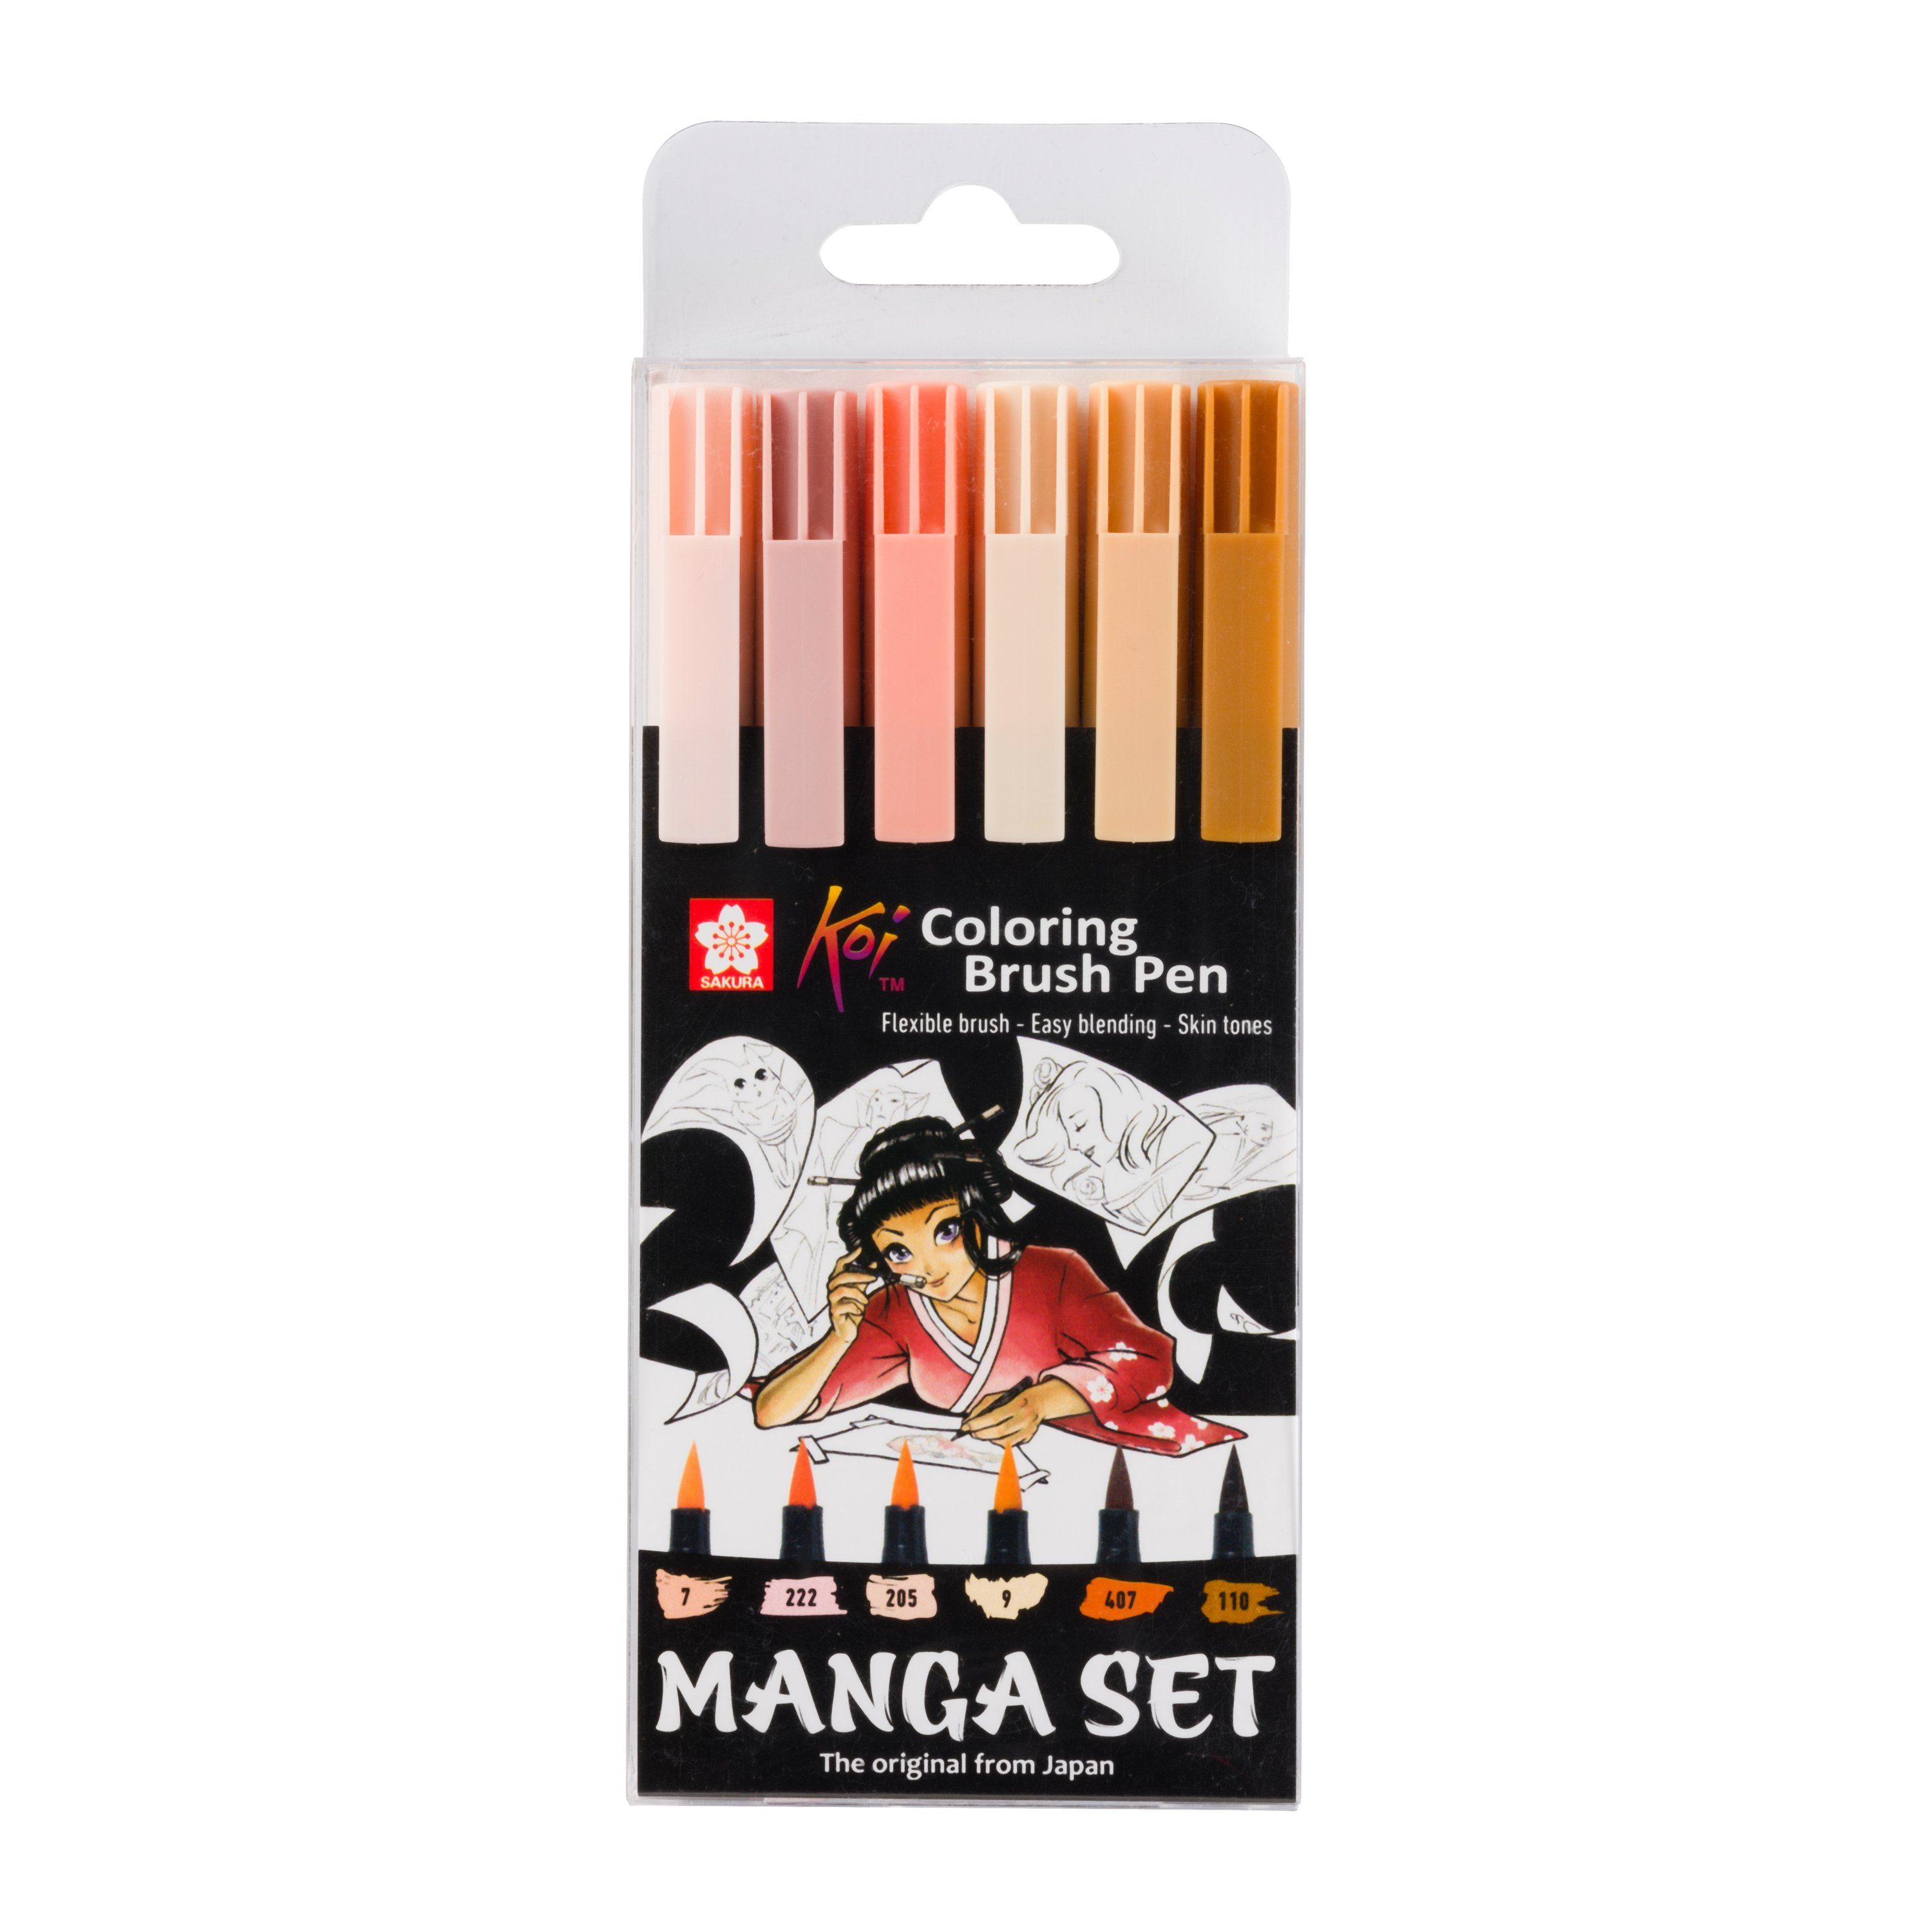 6er-Set Manga Sakura Pinselstift Sammlung, Koi Brush pen Colouring